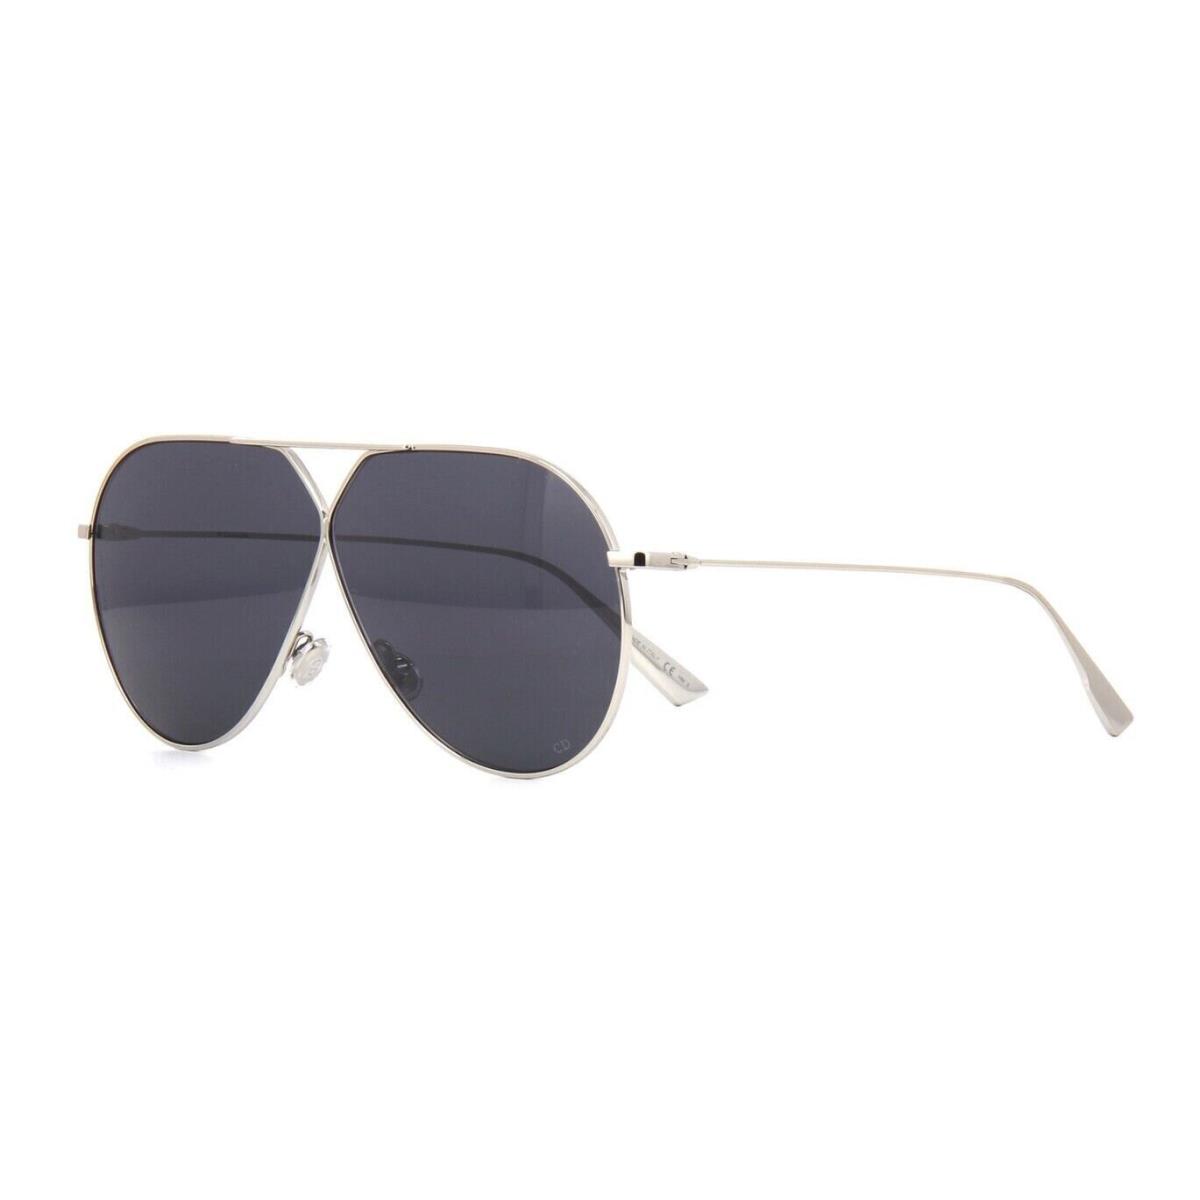 Christian Dior STELLAIRE3 3YGIR Silver Grey Aviator Sunglasses Italy